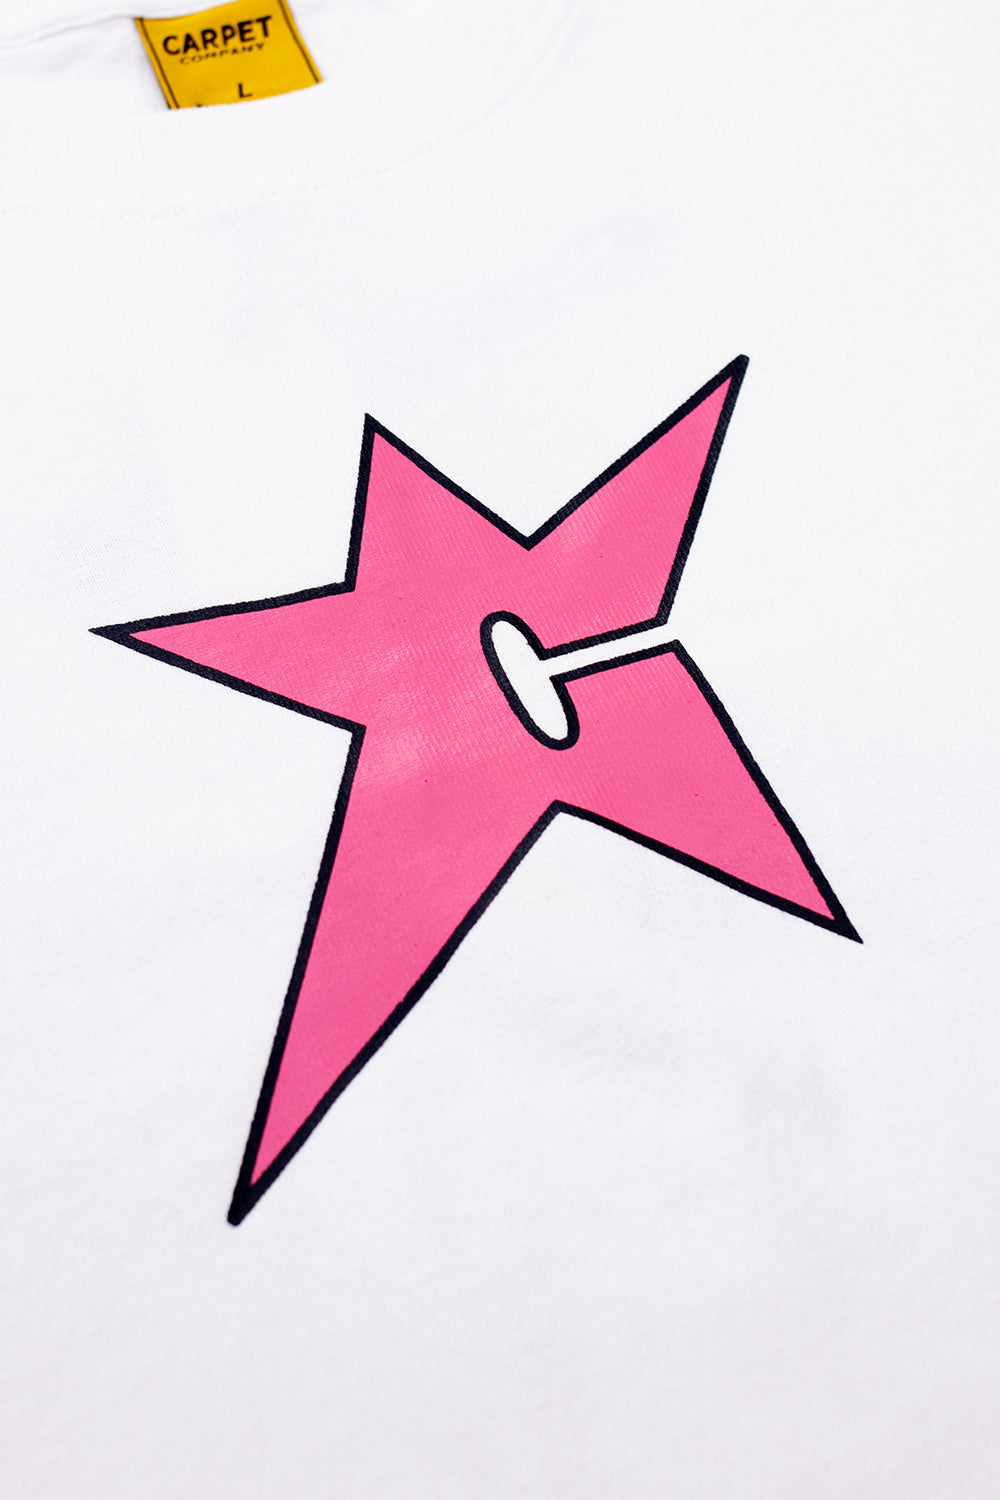 Carpet Company C-Star T-Shirt White (Pink Print) - BONKERS